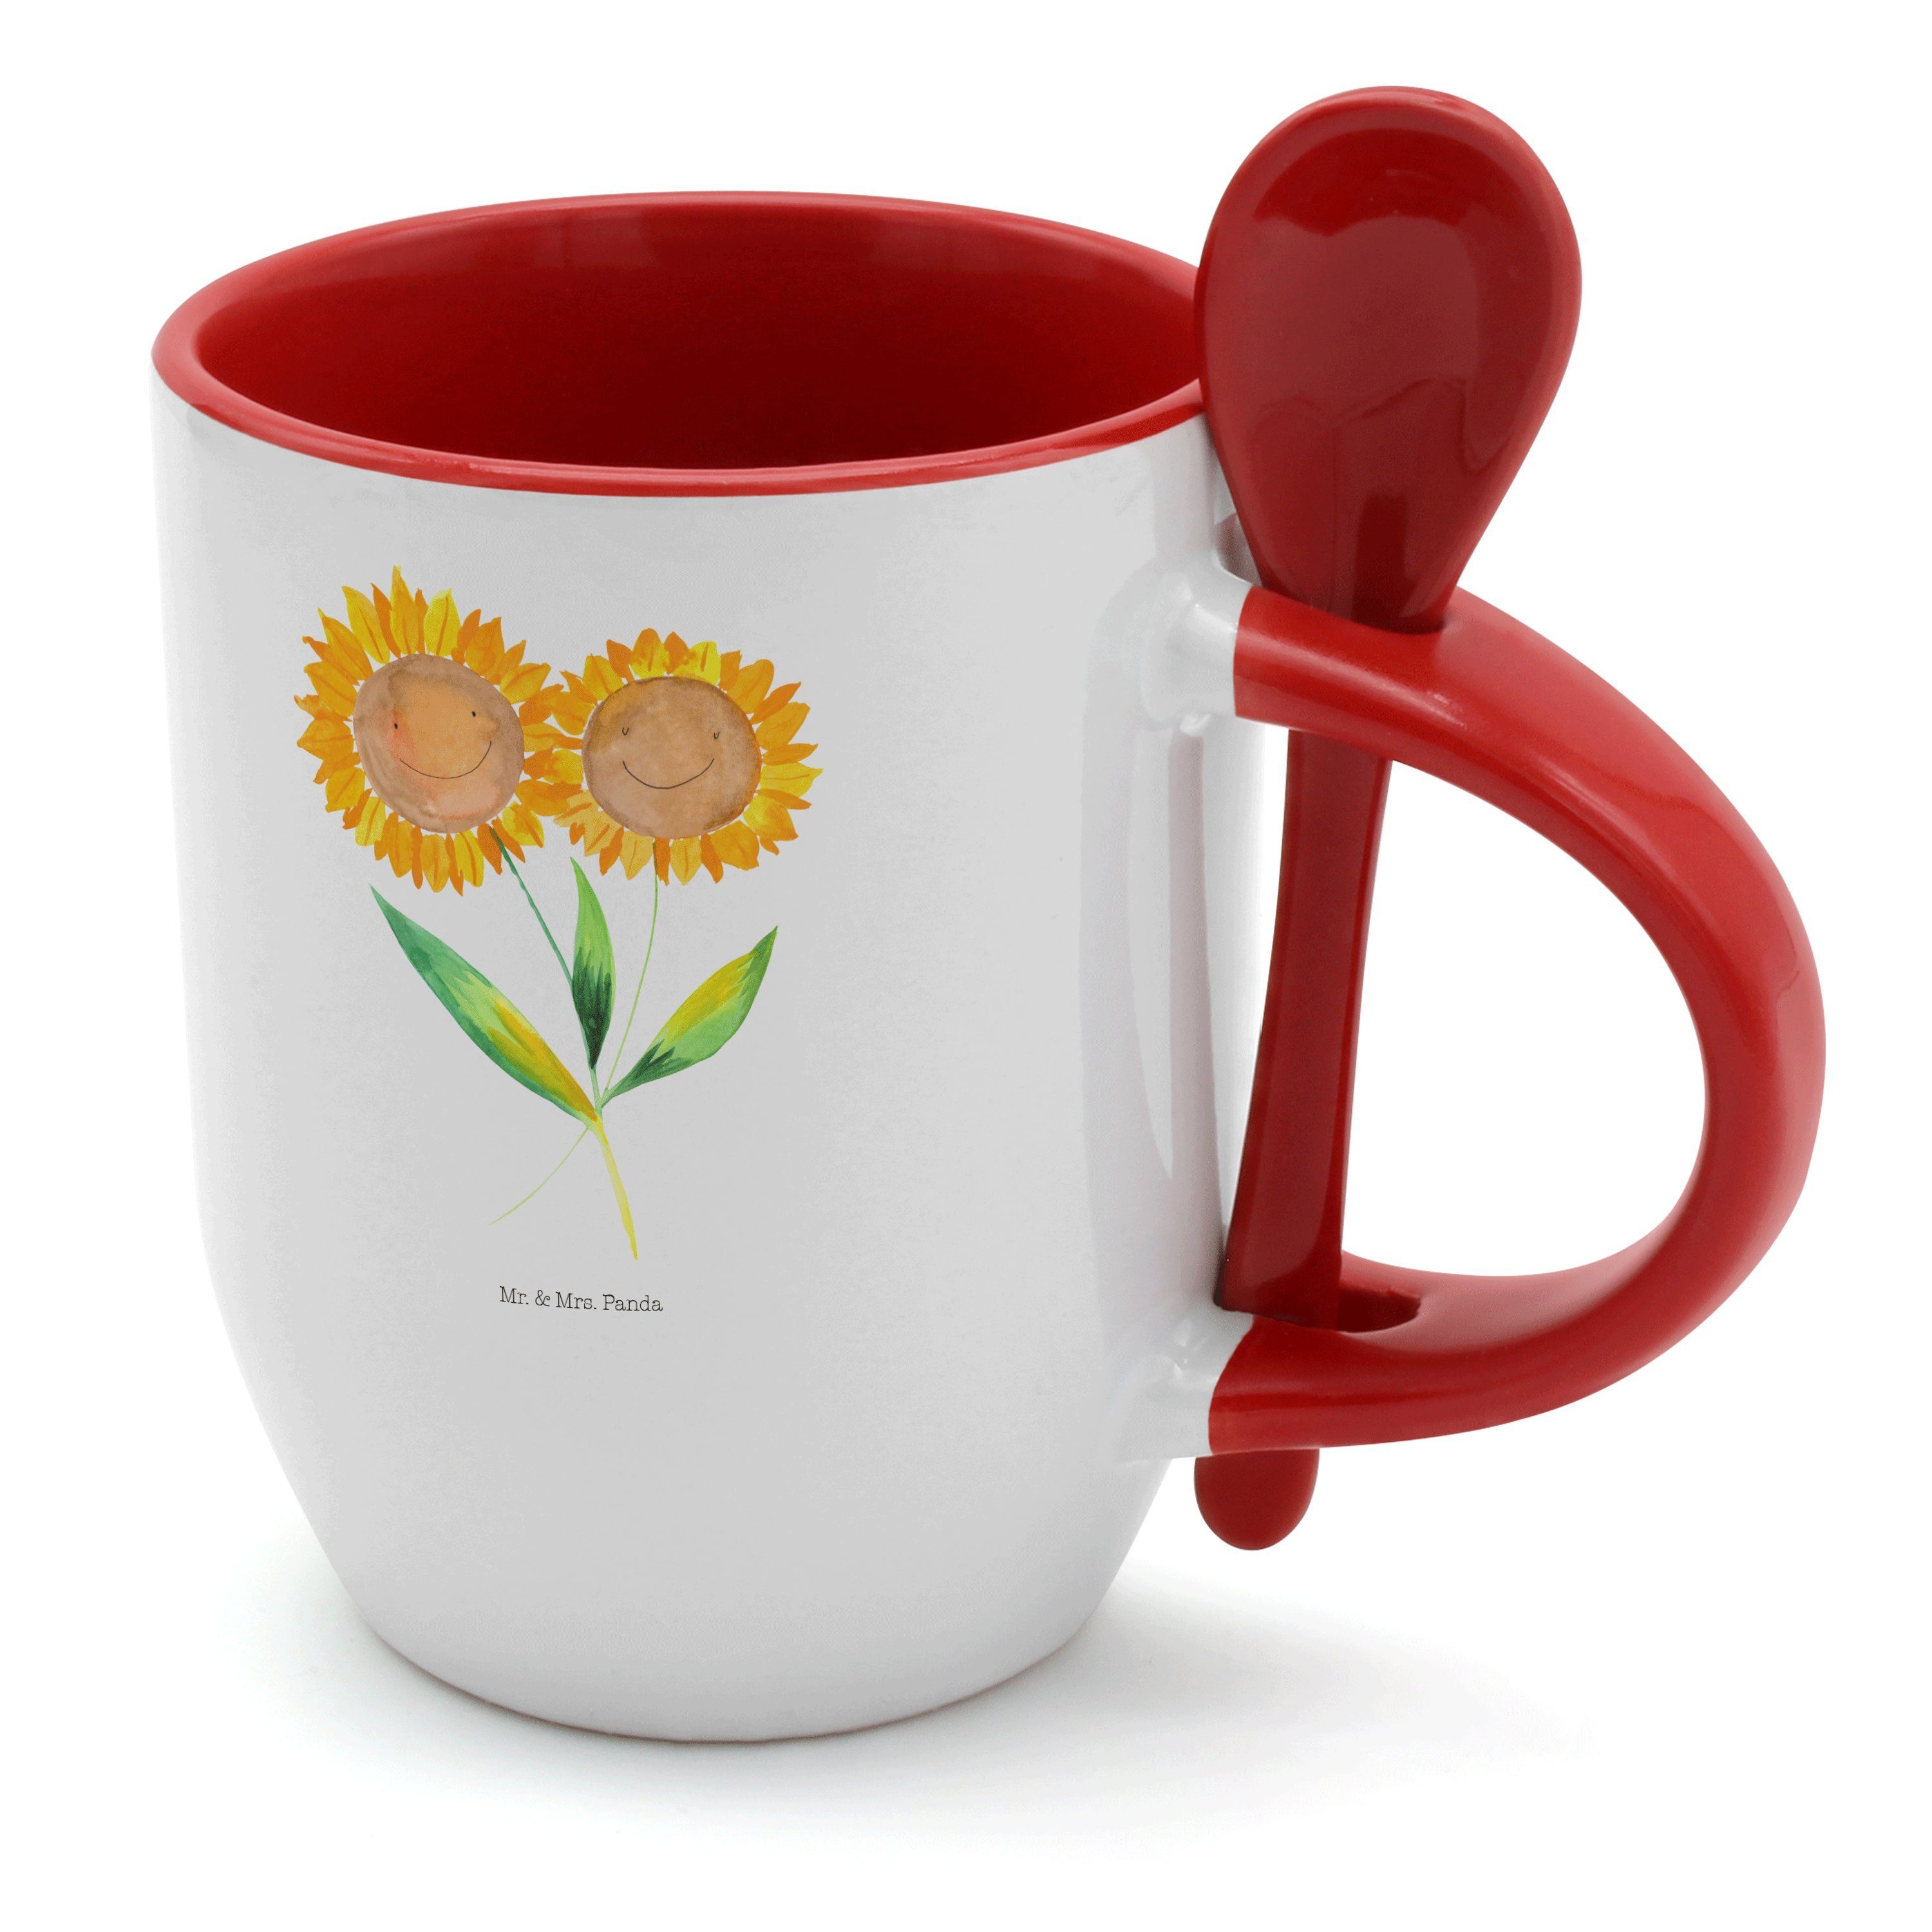 Mr. & Mrs. Panda Tasse Sonnenblume - Weiß - Geschenk, Kaffeetasse, Kaffeebecher, Tassen, Tas, Keramik